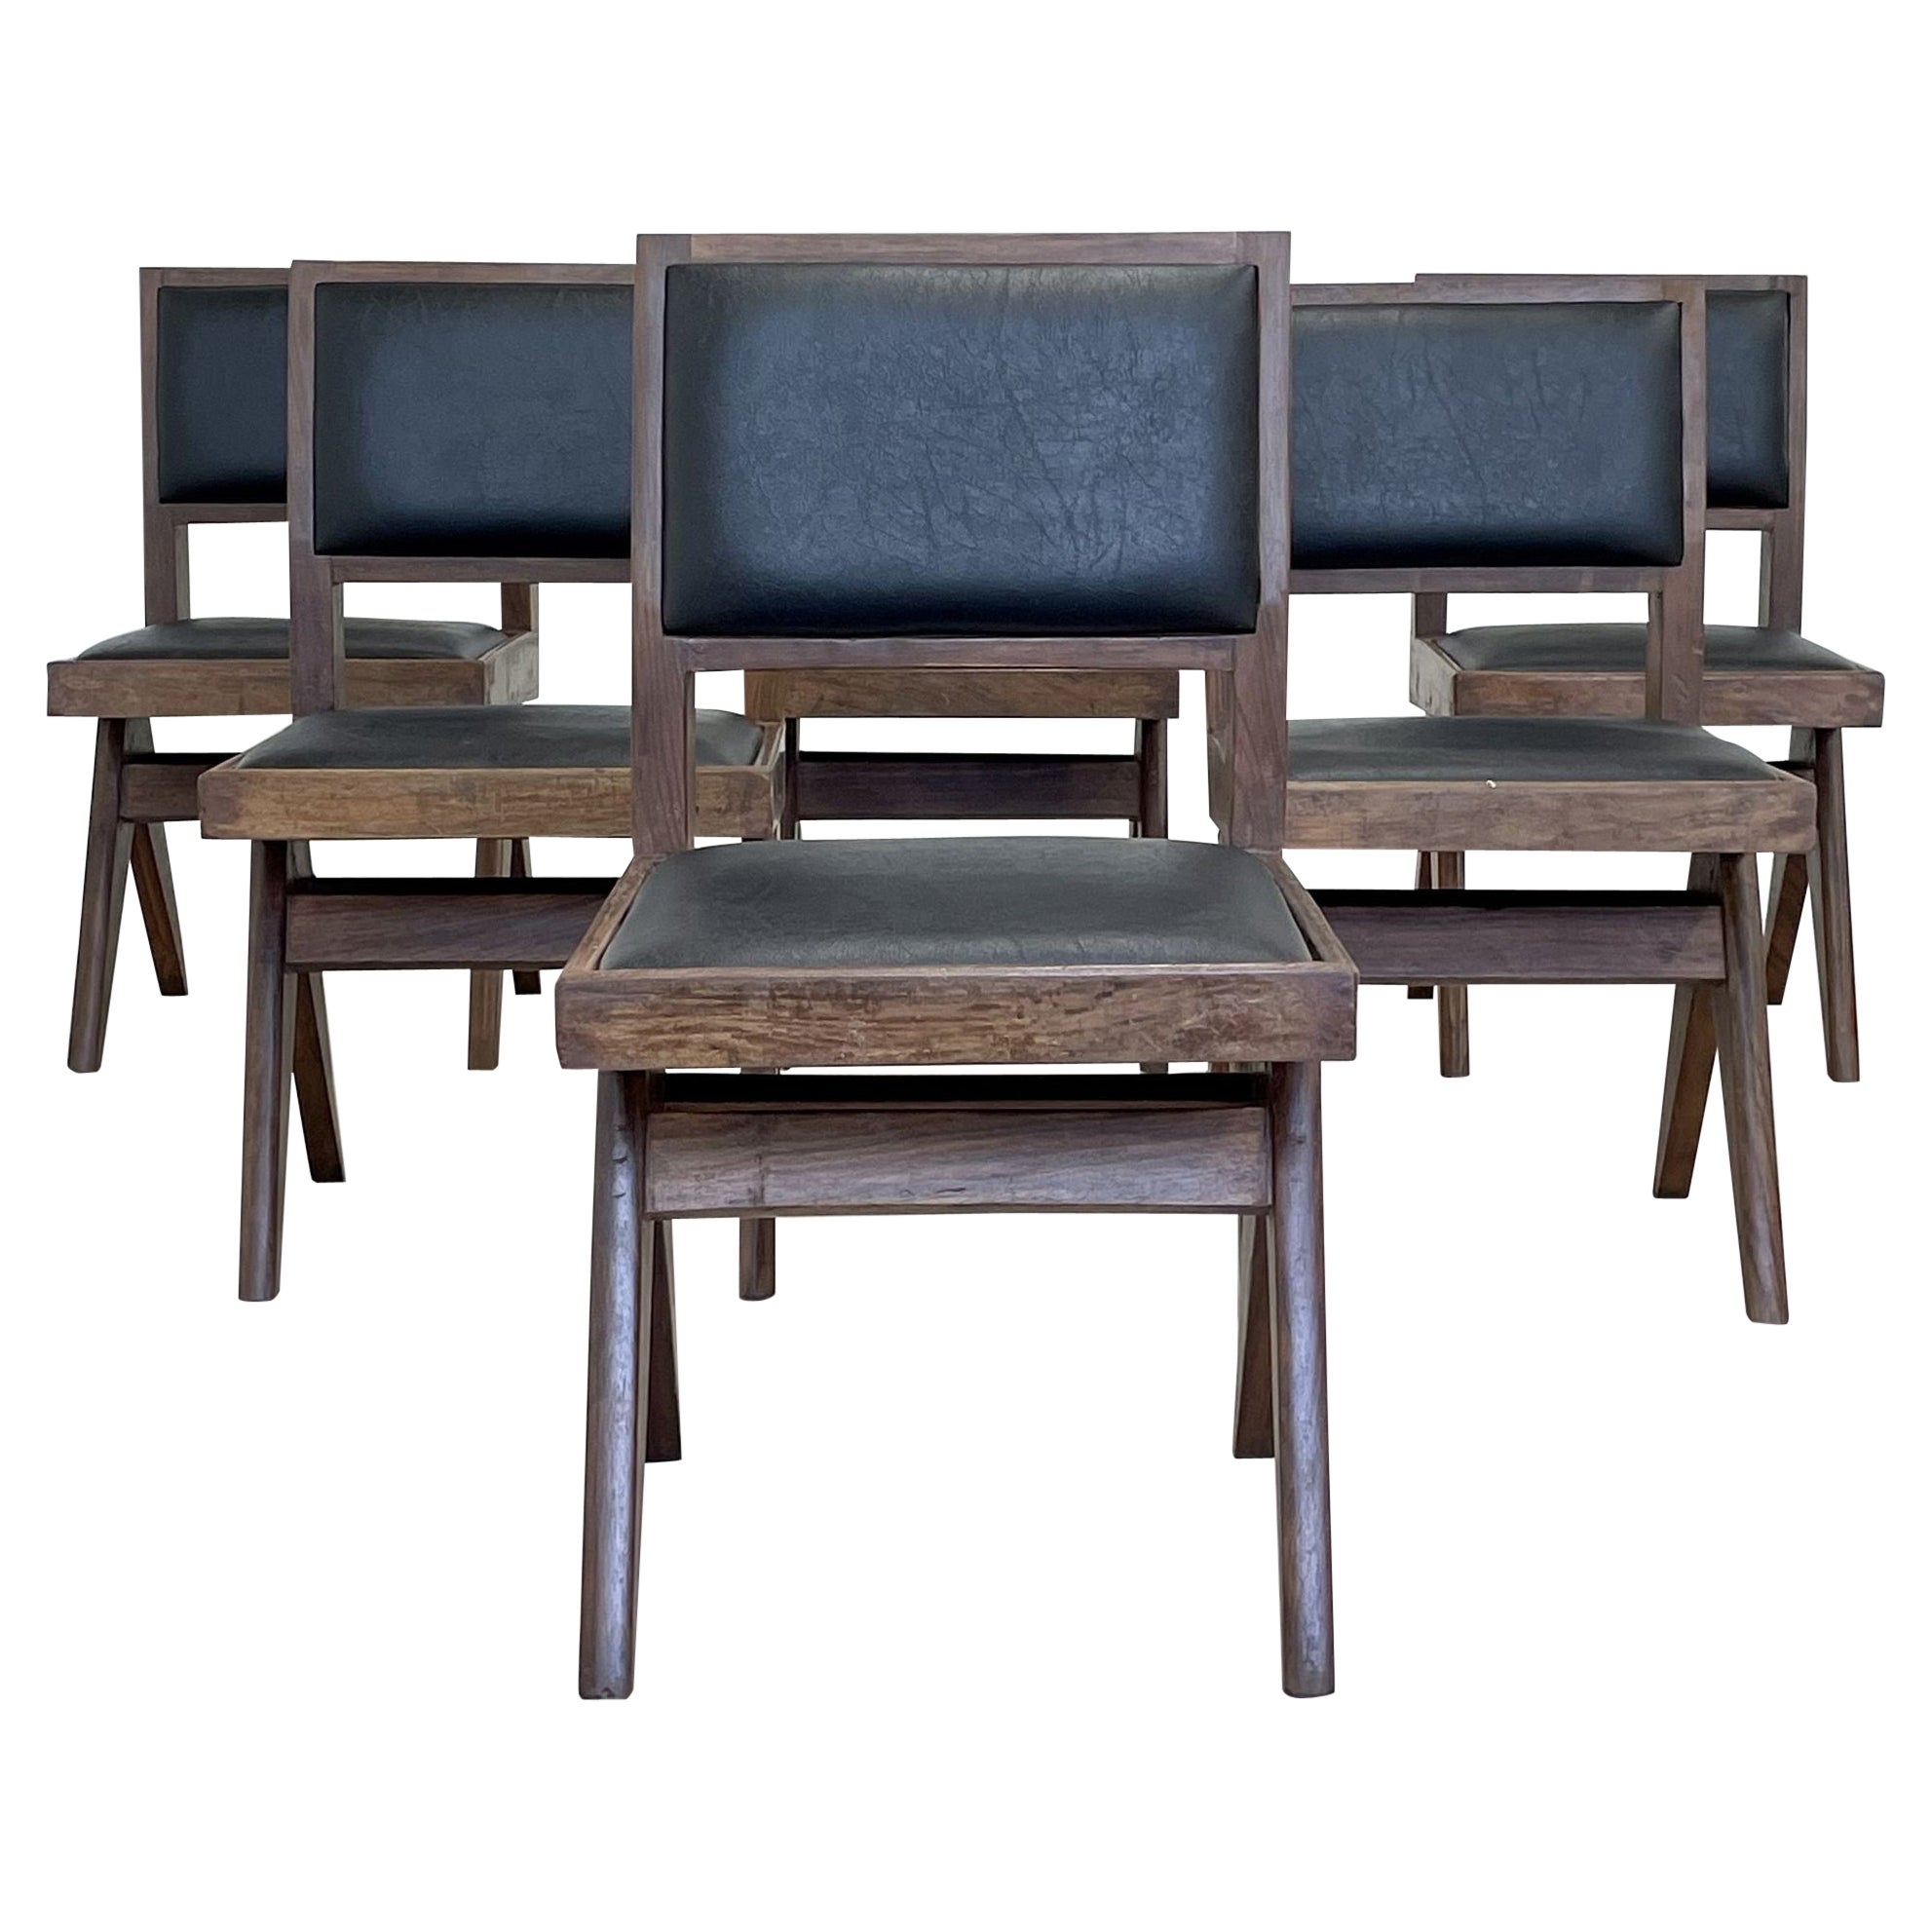 Pierre Jeanneret, French Mid-Century Modern, Six Dining Chairs, Teak, Chandigarh